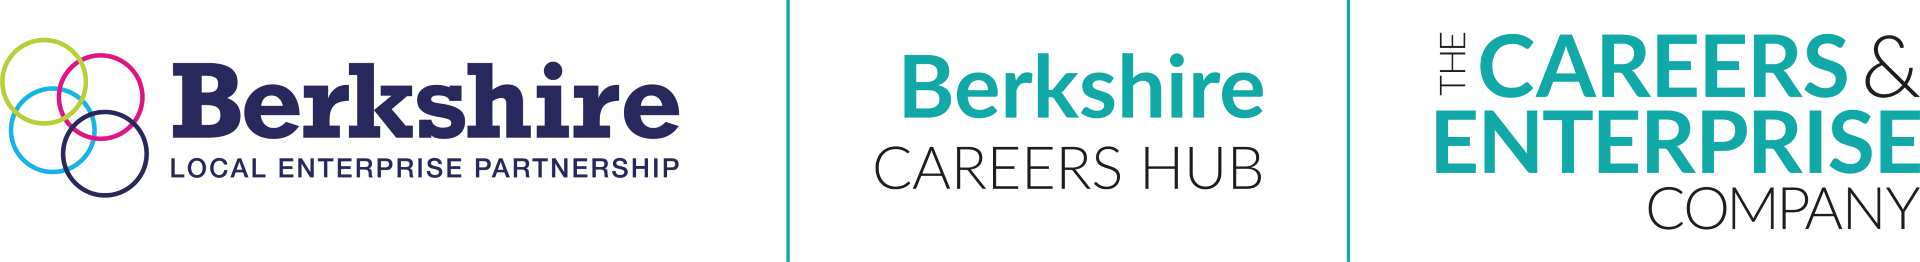 Berkshire Careers Hub